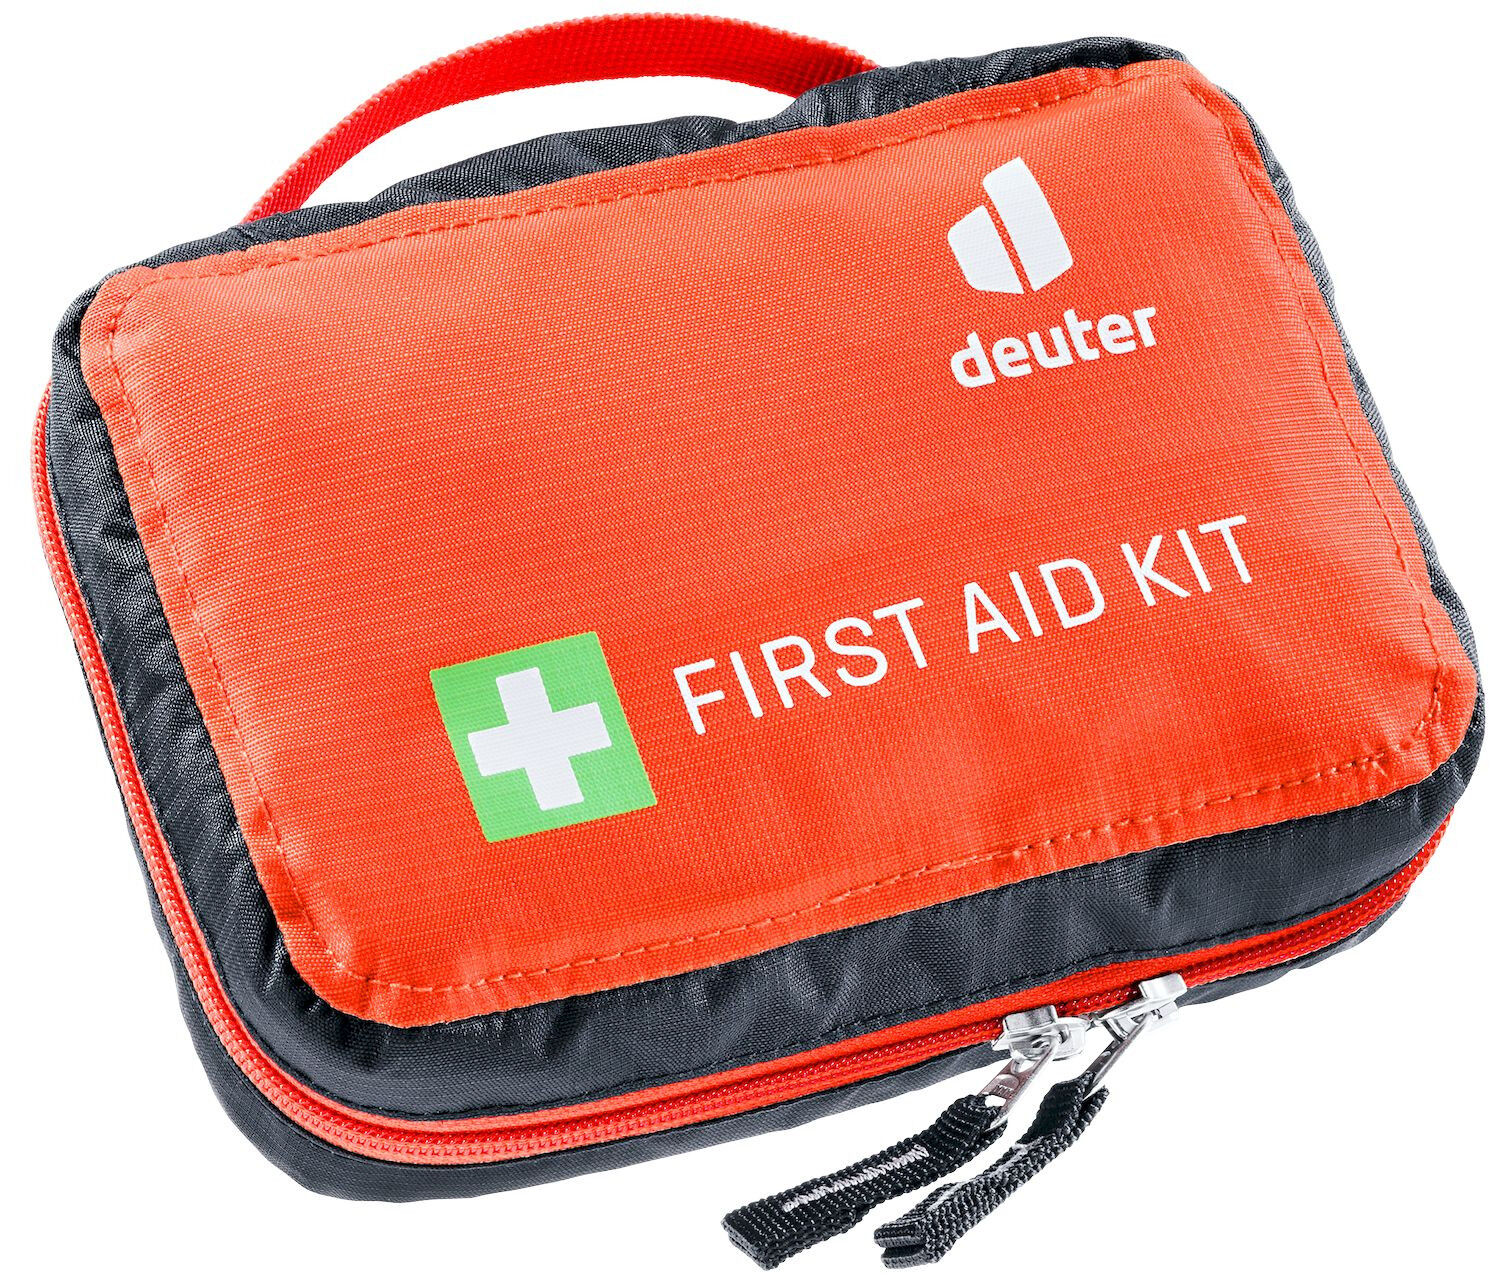 Deuter First Aid Kit - First aid kit